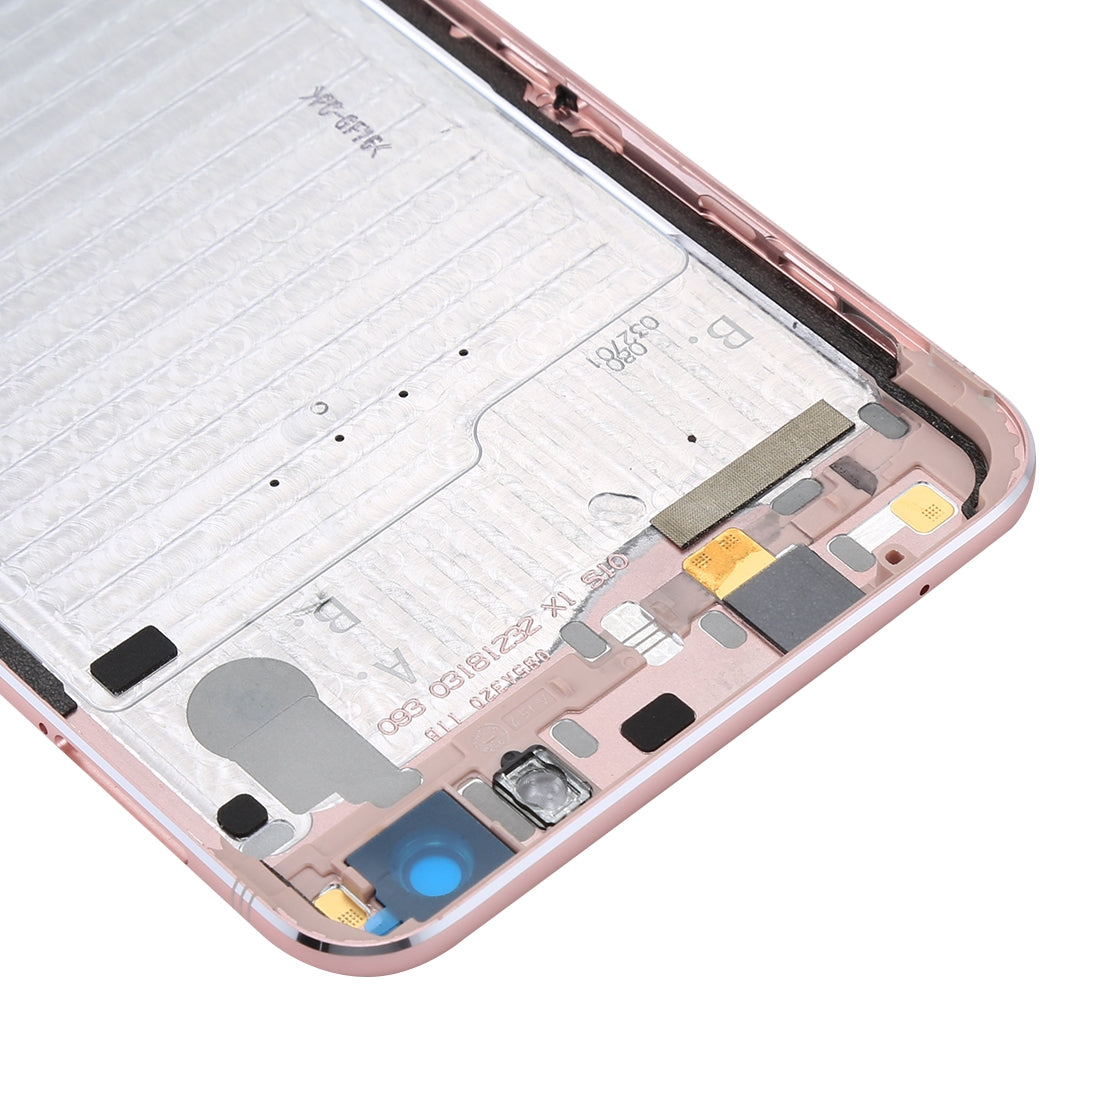 Tapa Bateria Back Cover Oppo R9s Plus / F3 Plus Dorado Rosa